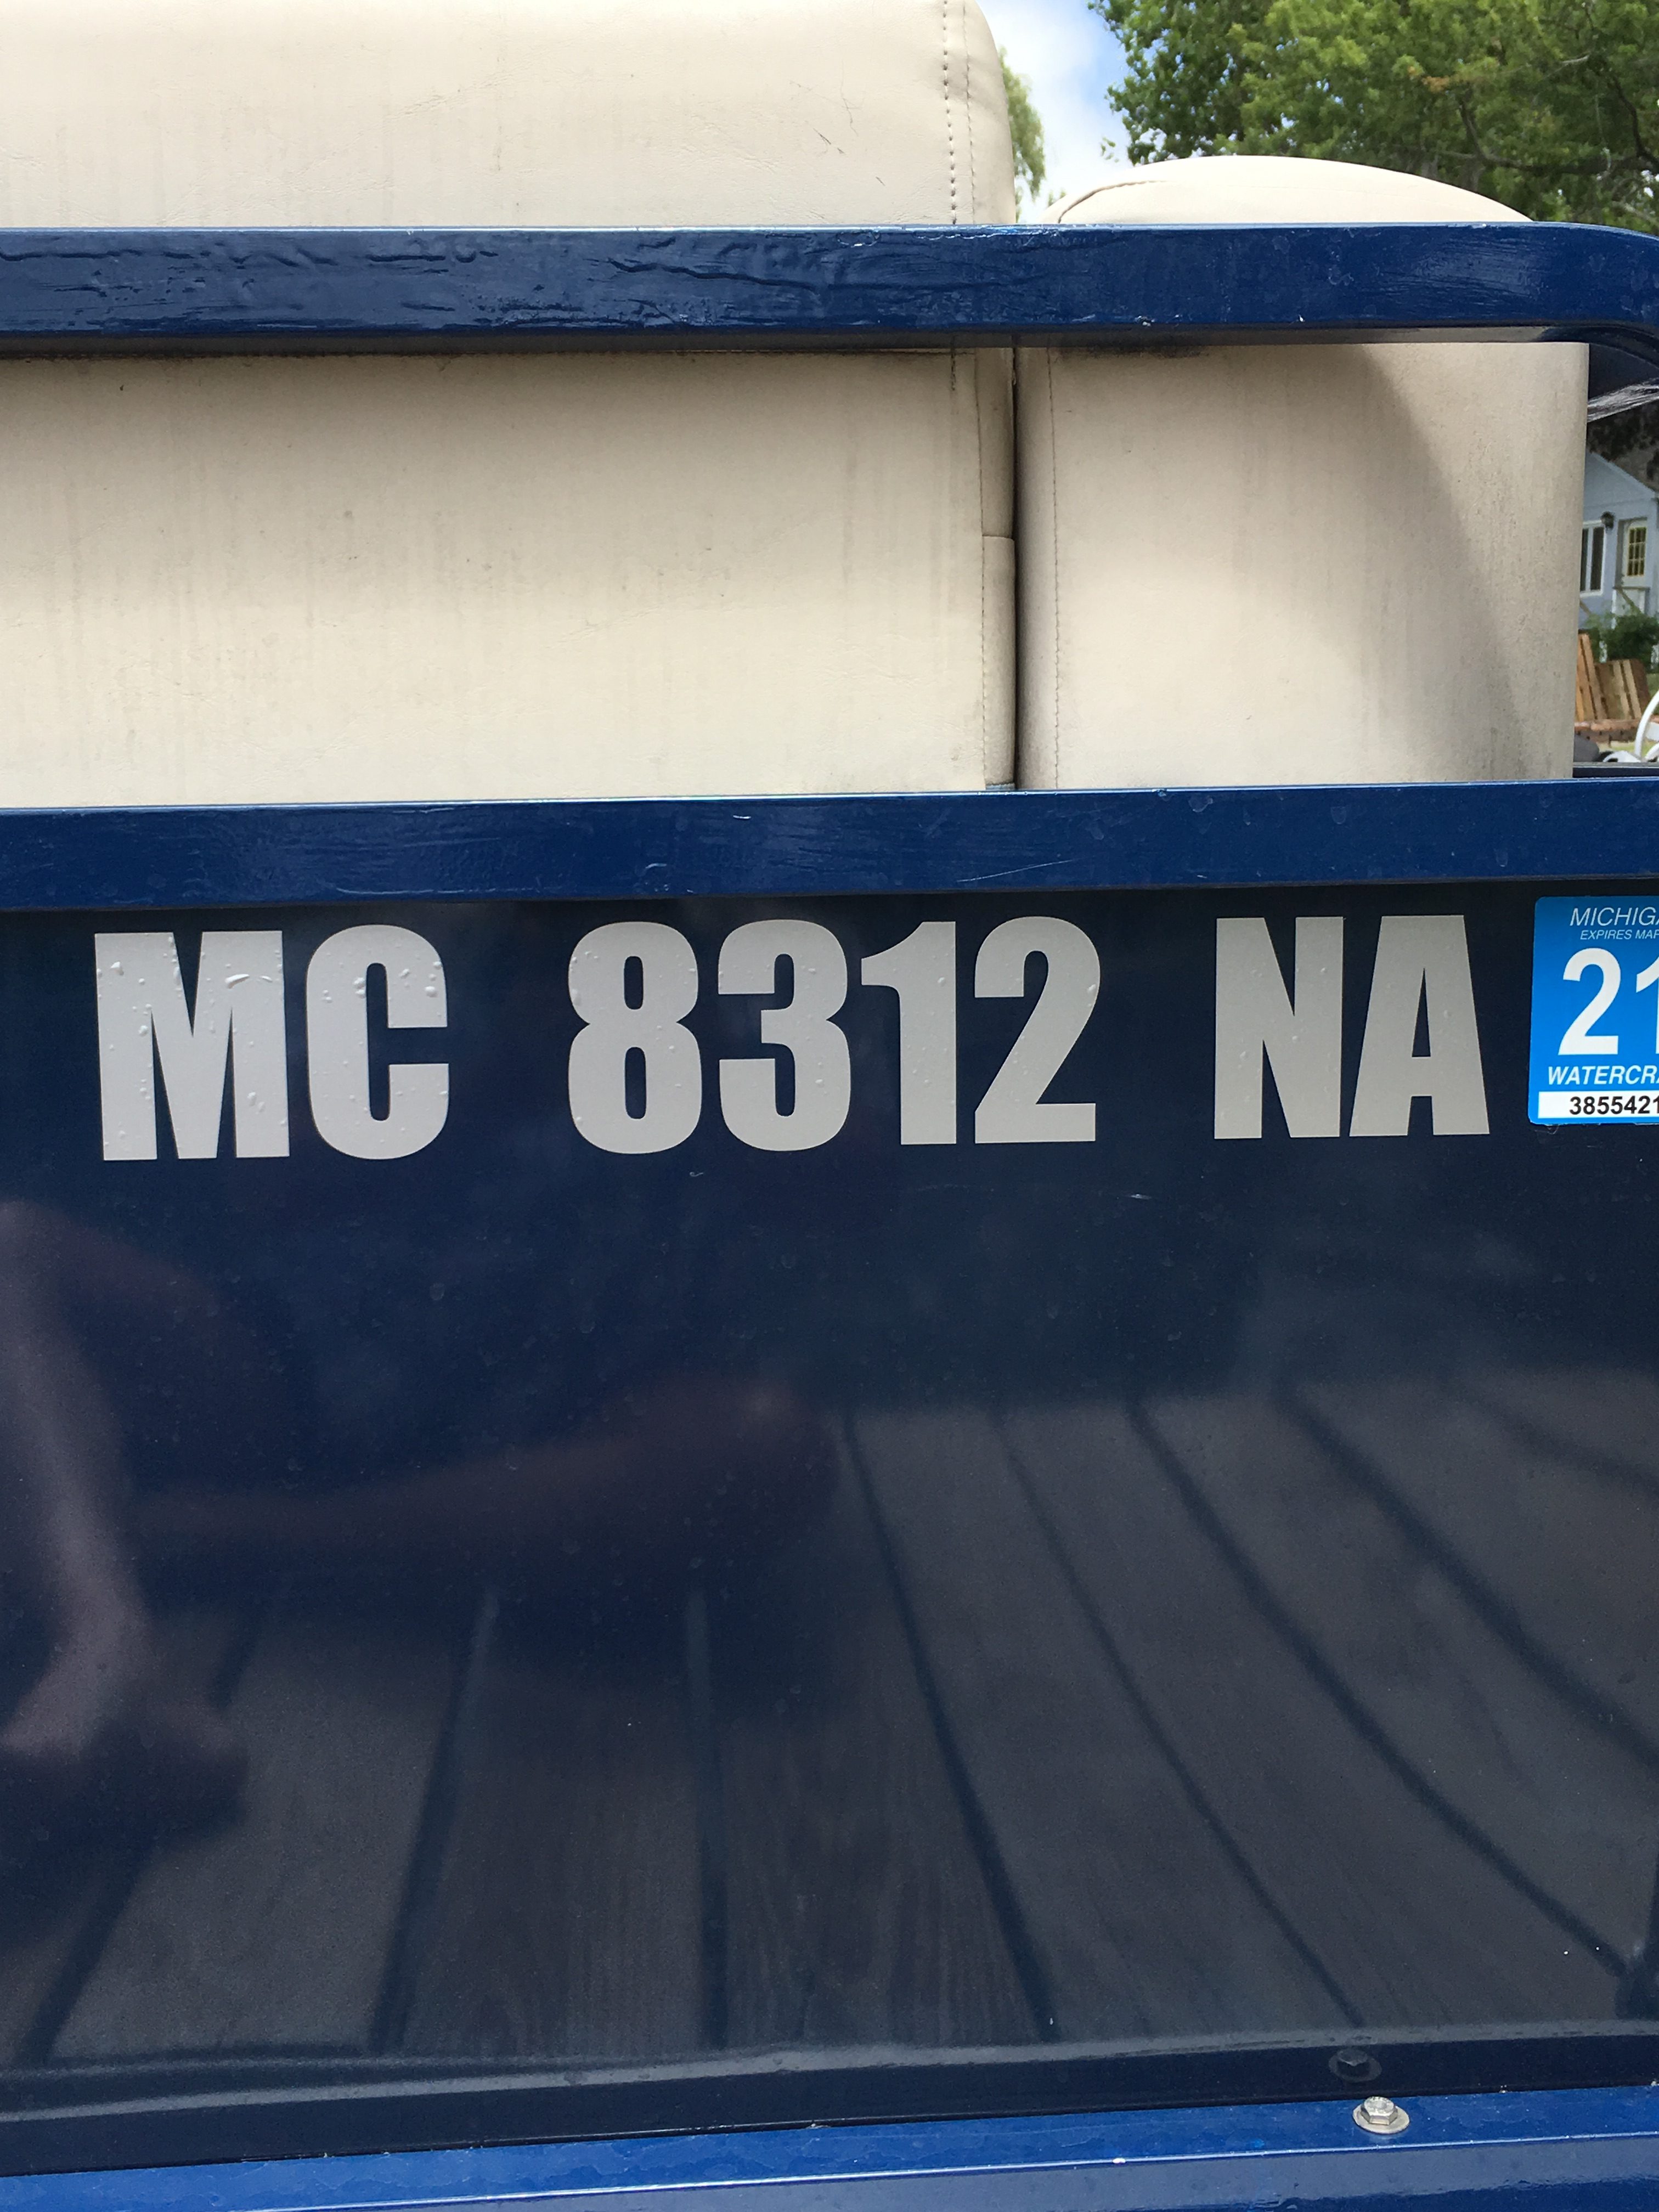 Michigan MC Number Stickers - Boat Graphics | michigan-mc-numbers.com